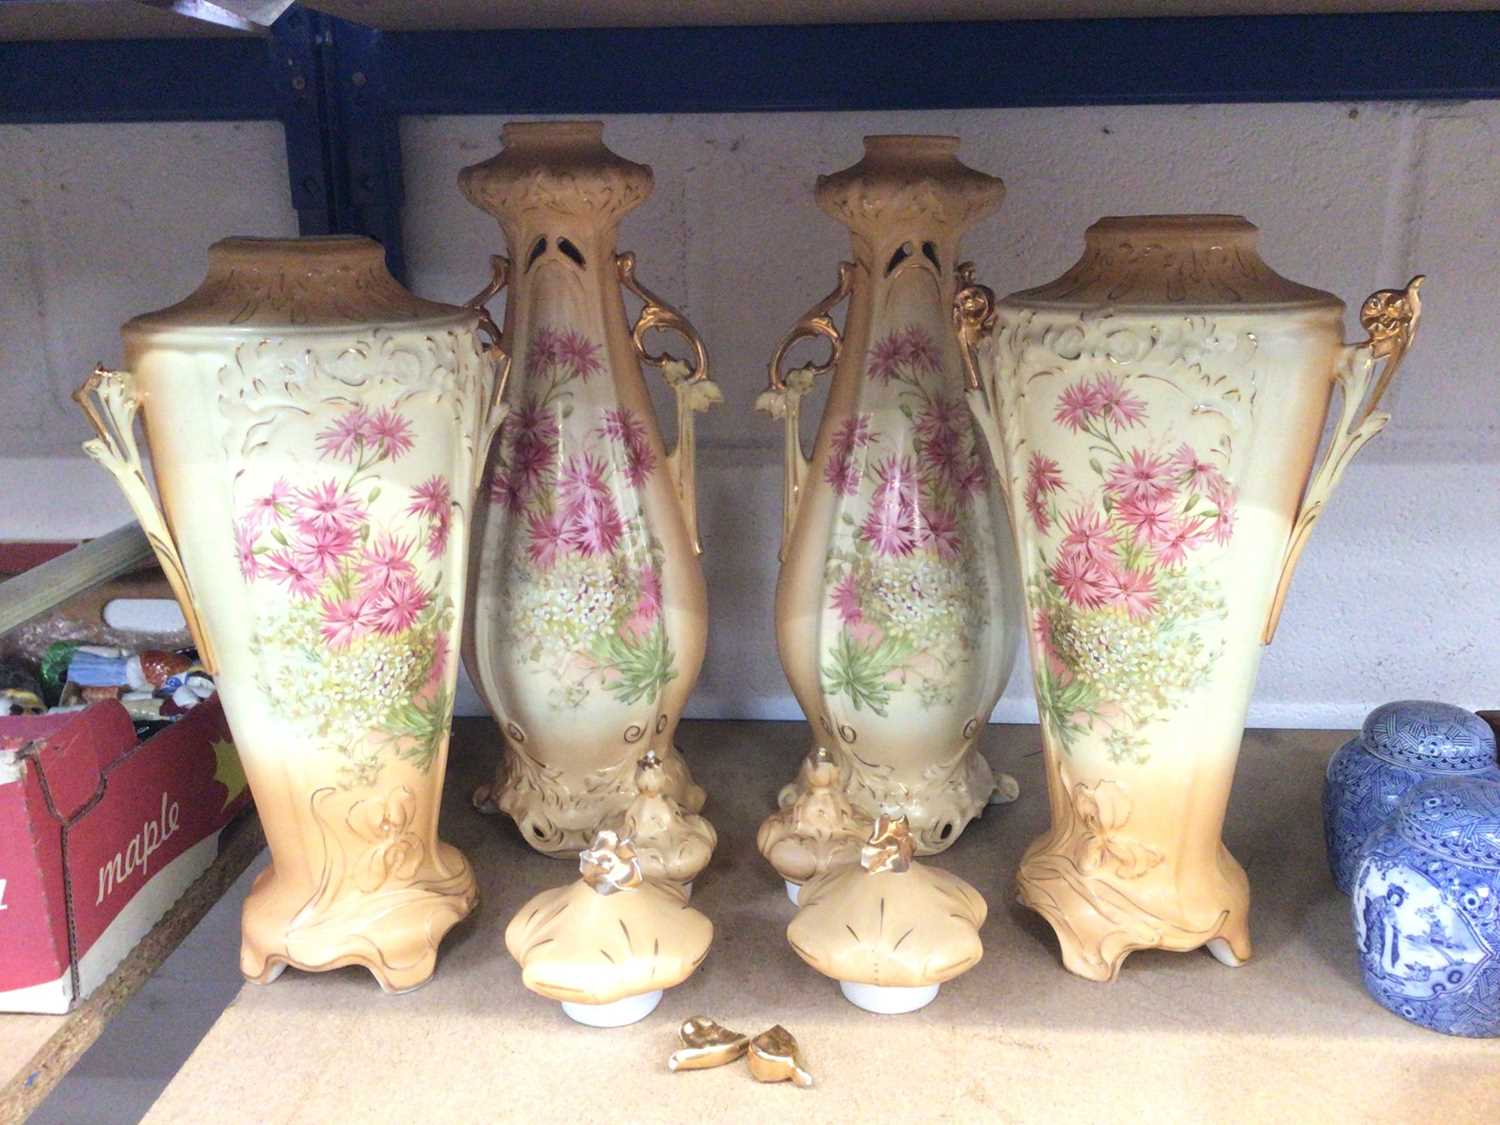 Pair of Royal Weittina vases